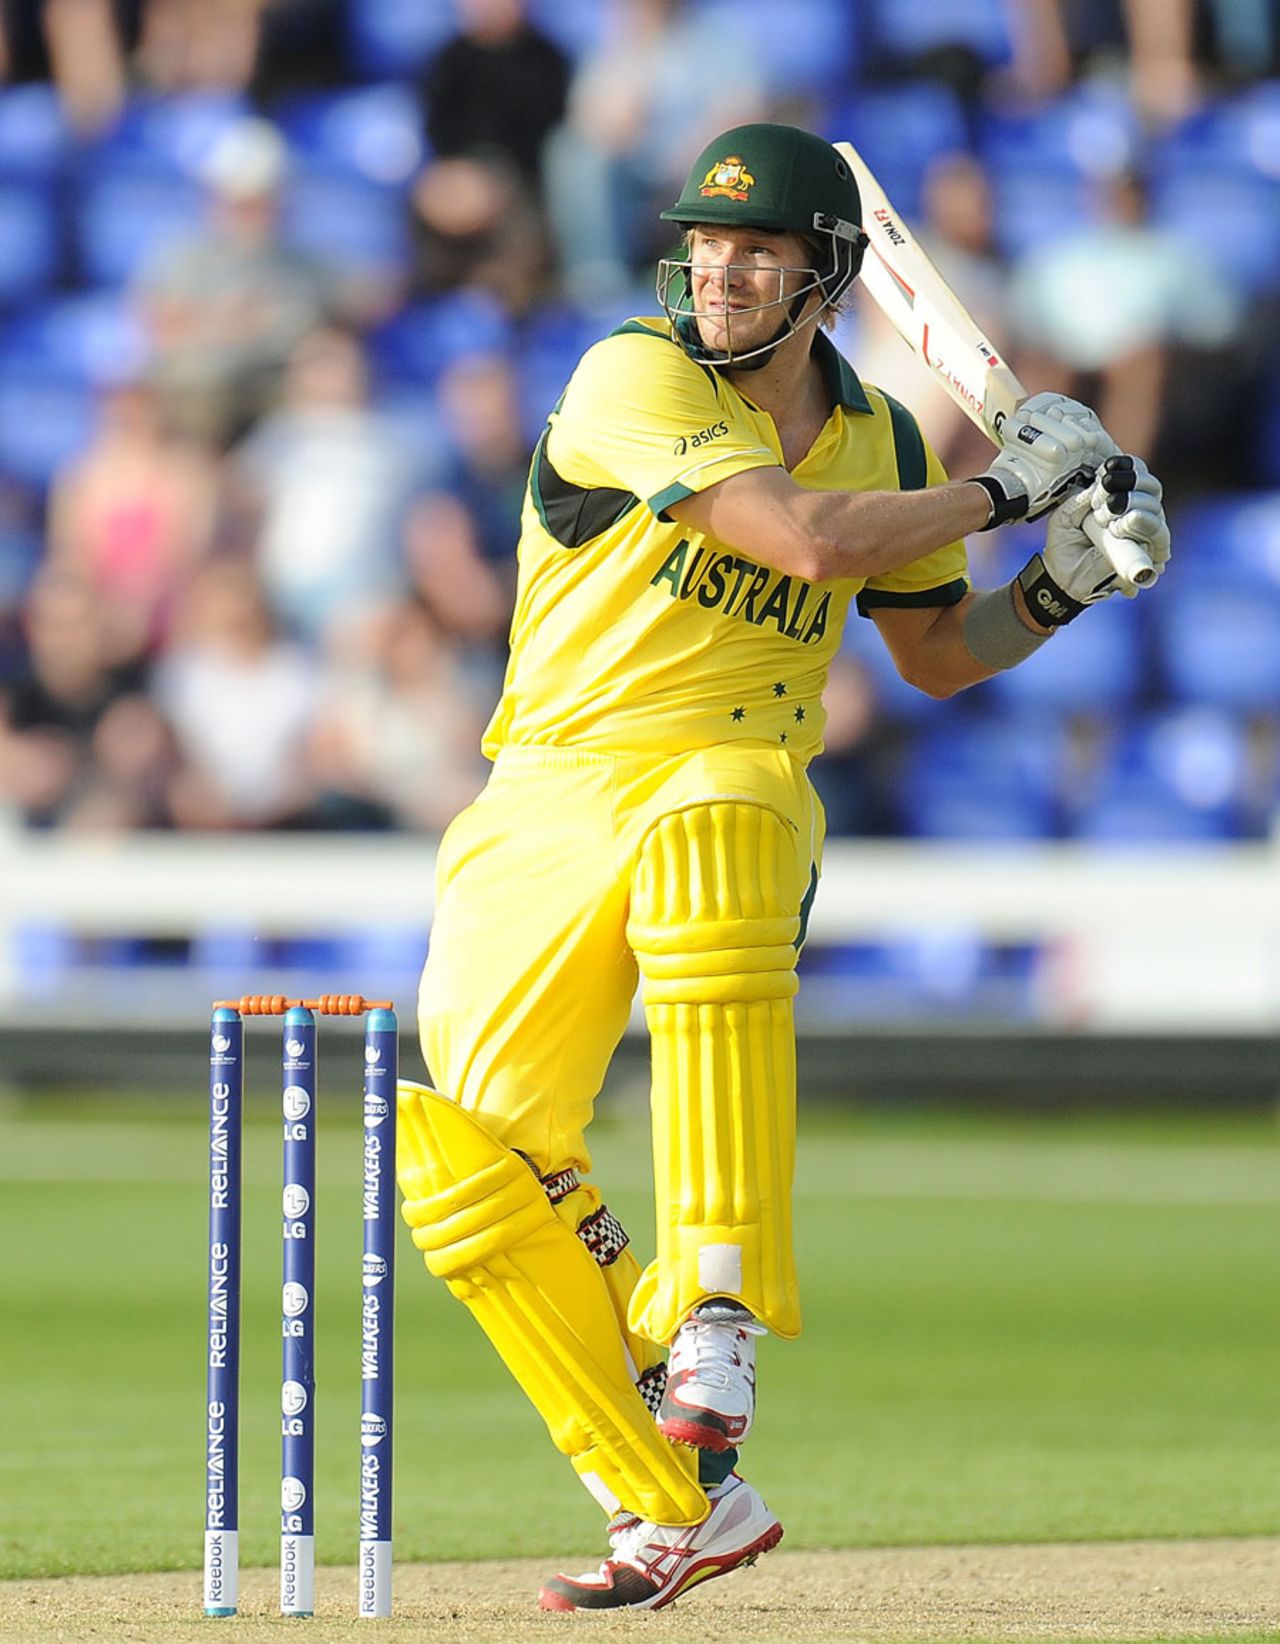 Shane Watson blazed 135 in just 98 balls, Australia v West Indies, Champions Trophy 2013 warm-up match, Cardiff, June 1